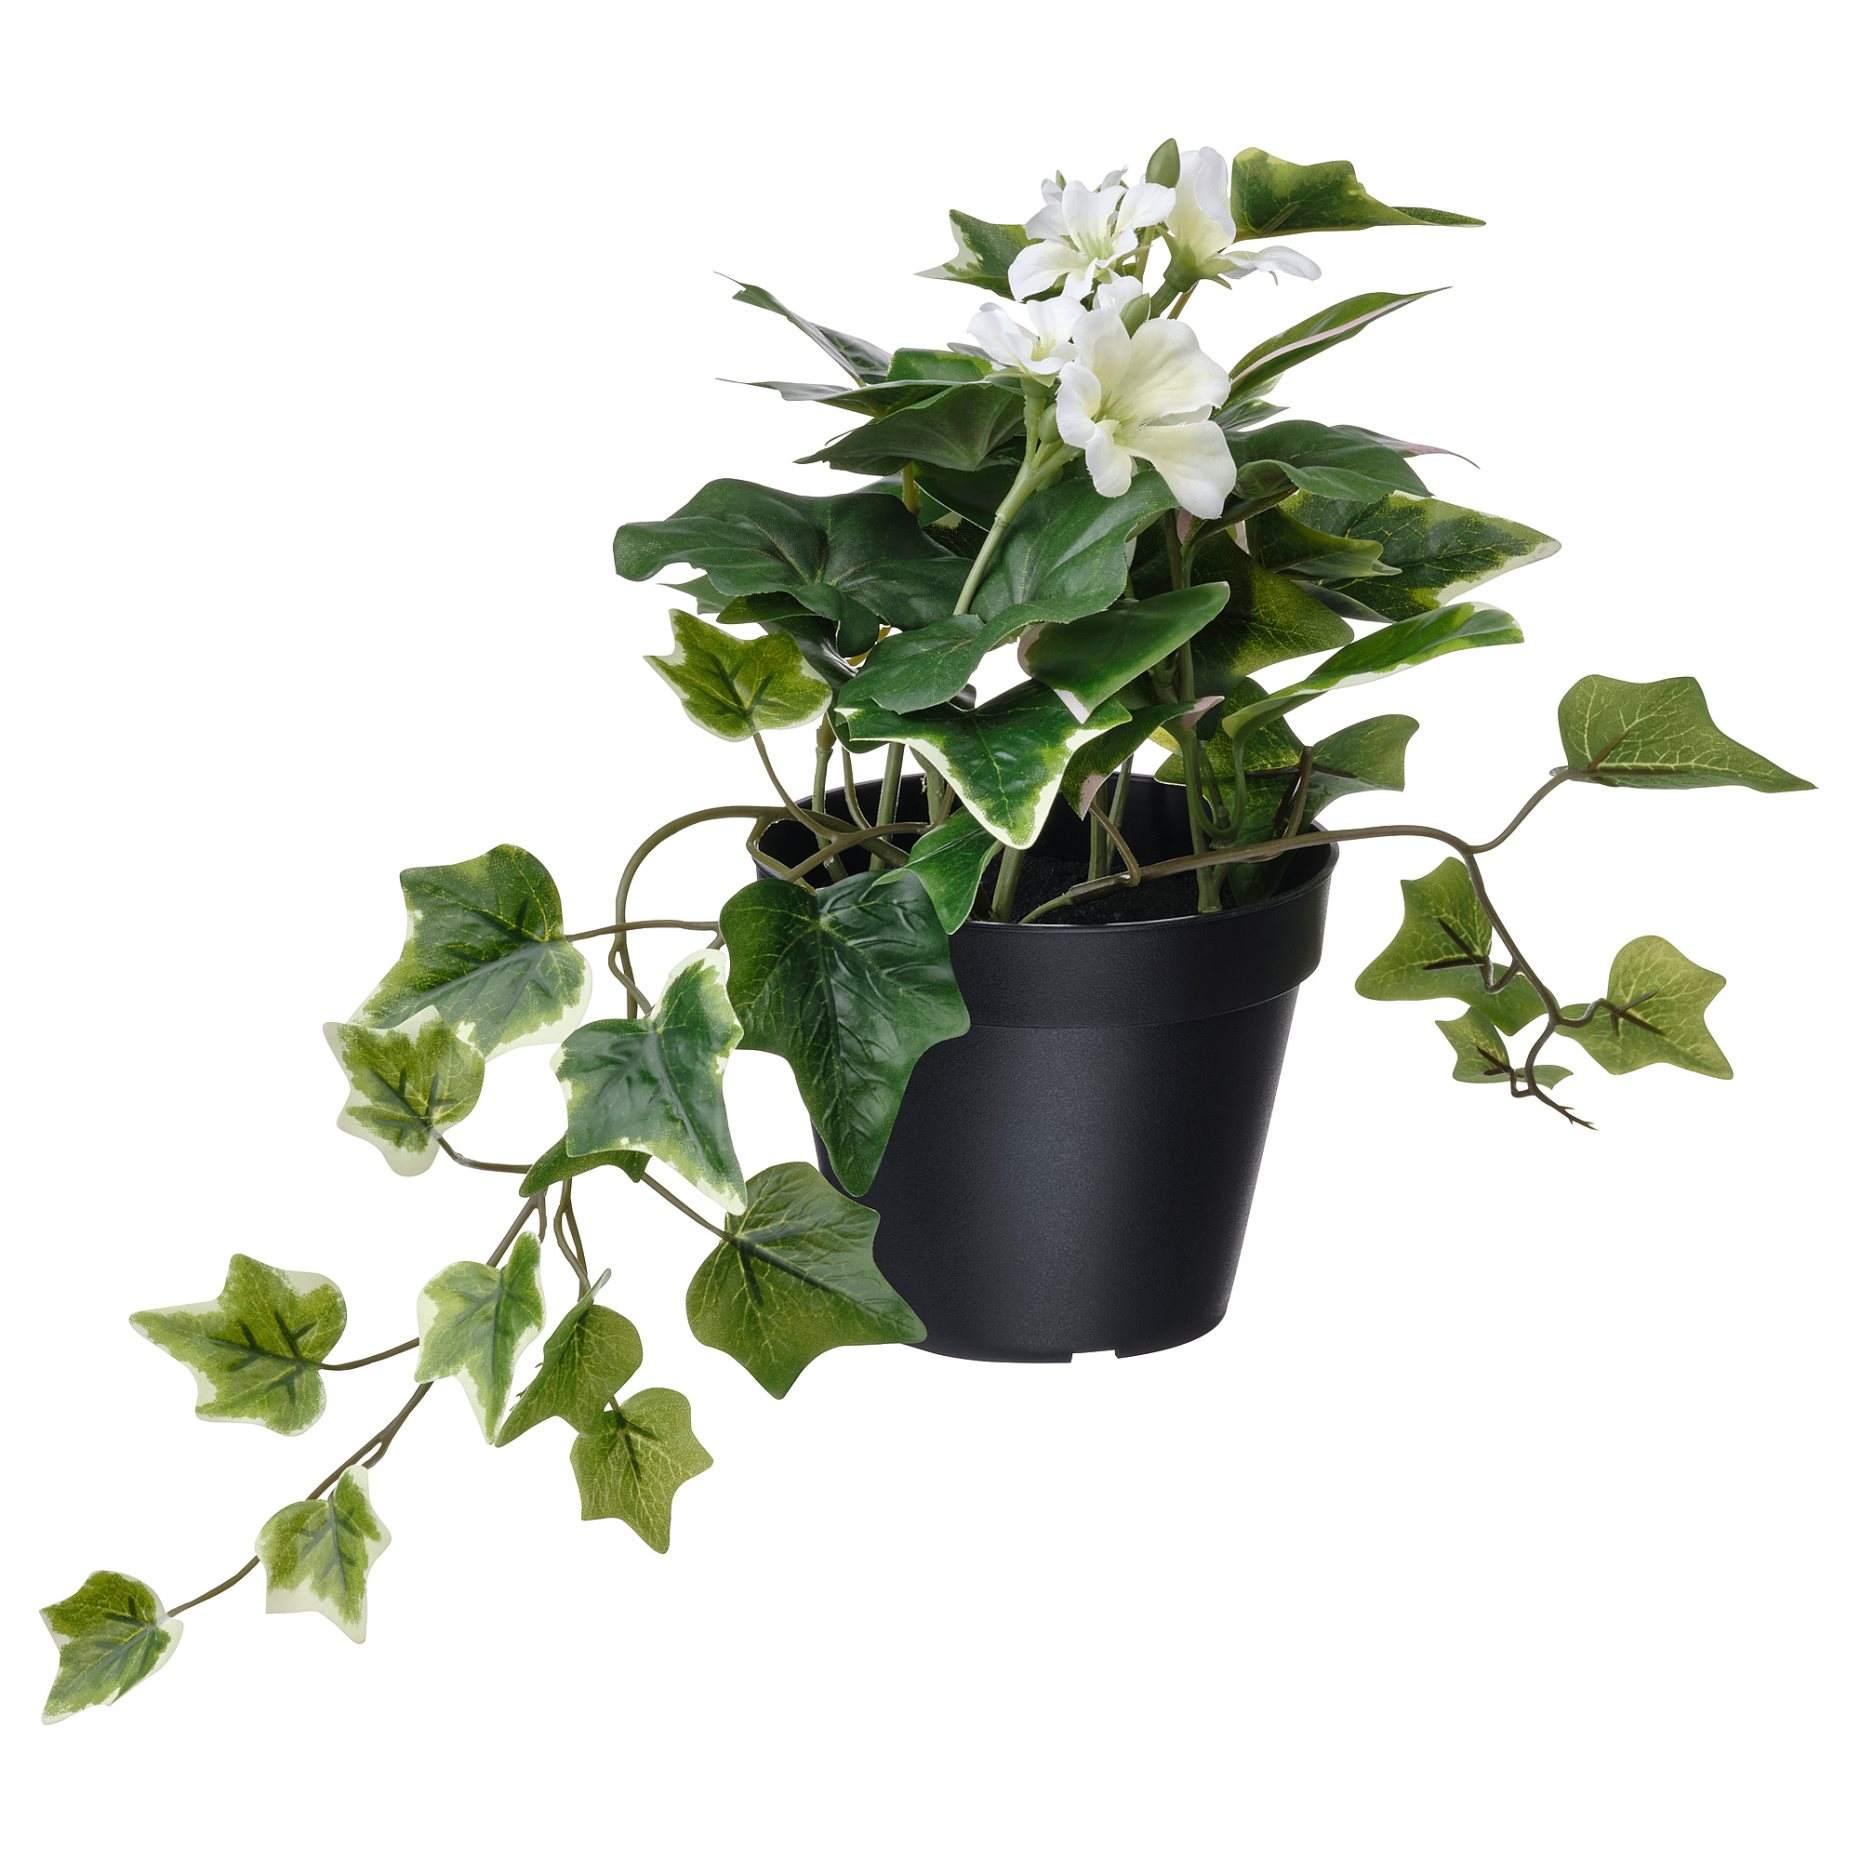 FEJKA, τεχνητό φυτό σε γλάστρα/σύνθεση/εσωτερικού/εξωτερικού χώρου, 12 cm, 205.380.09